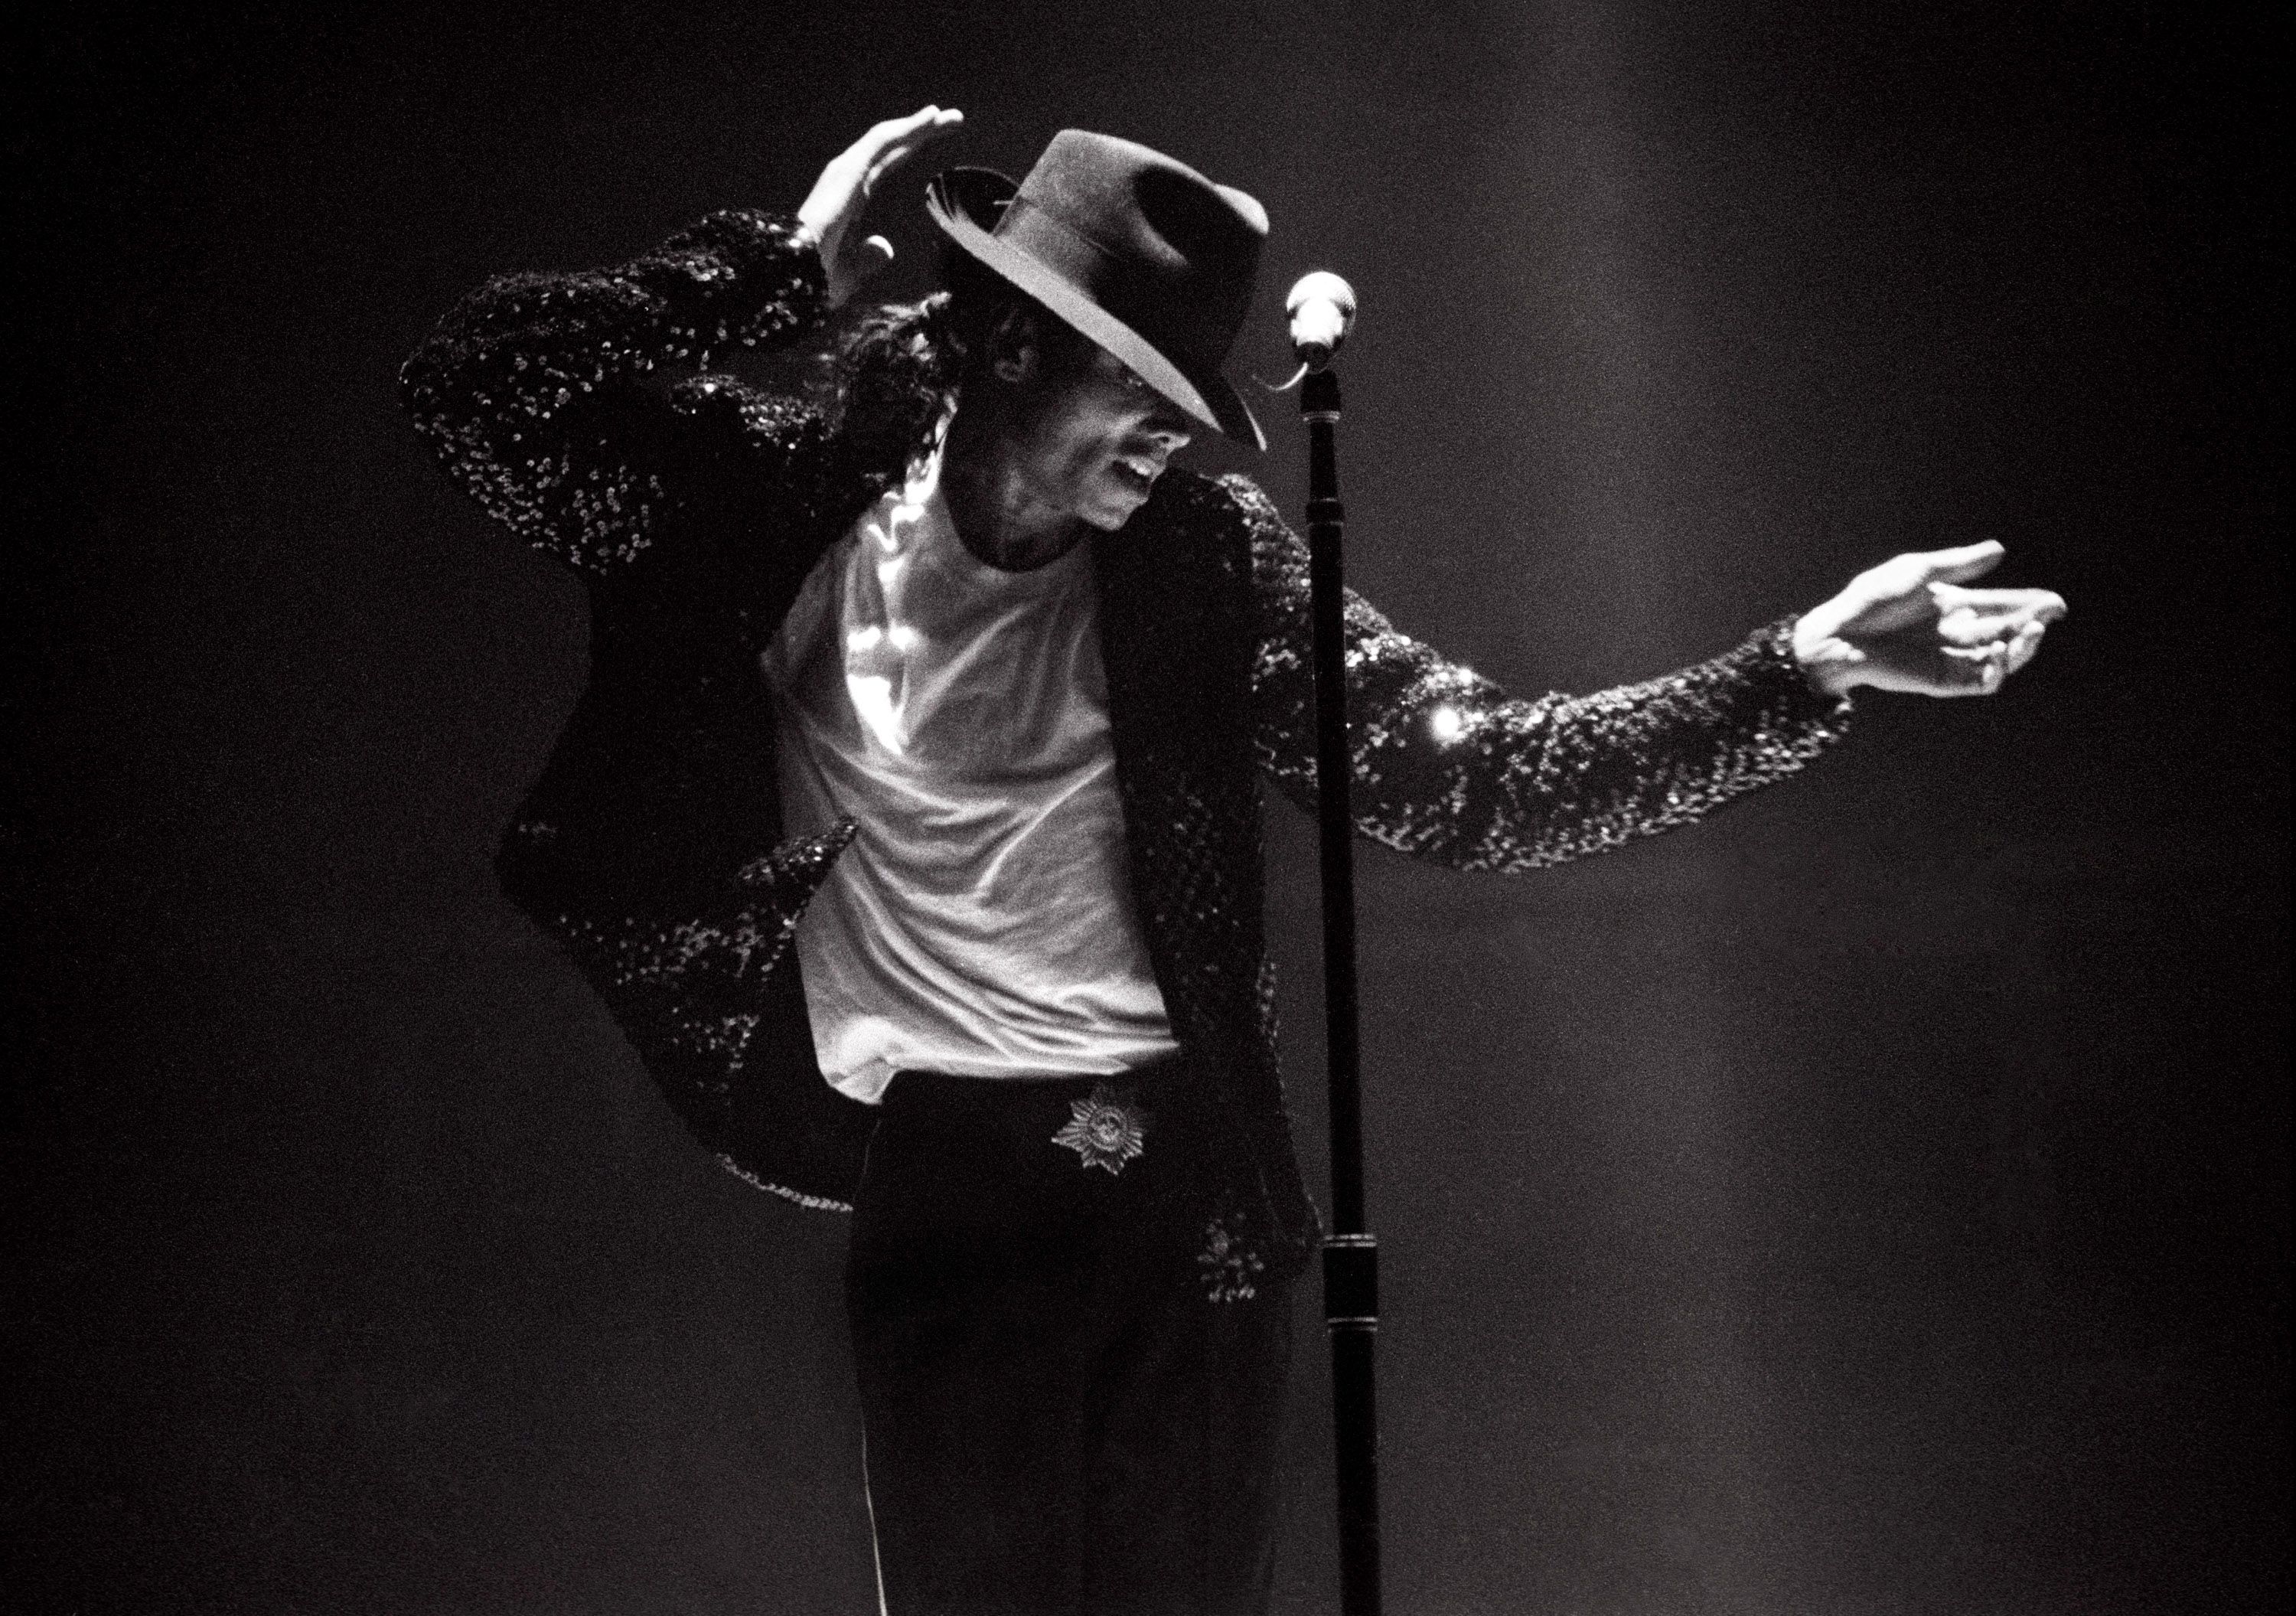 Michael Jackson: African American Singer